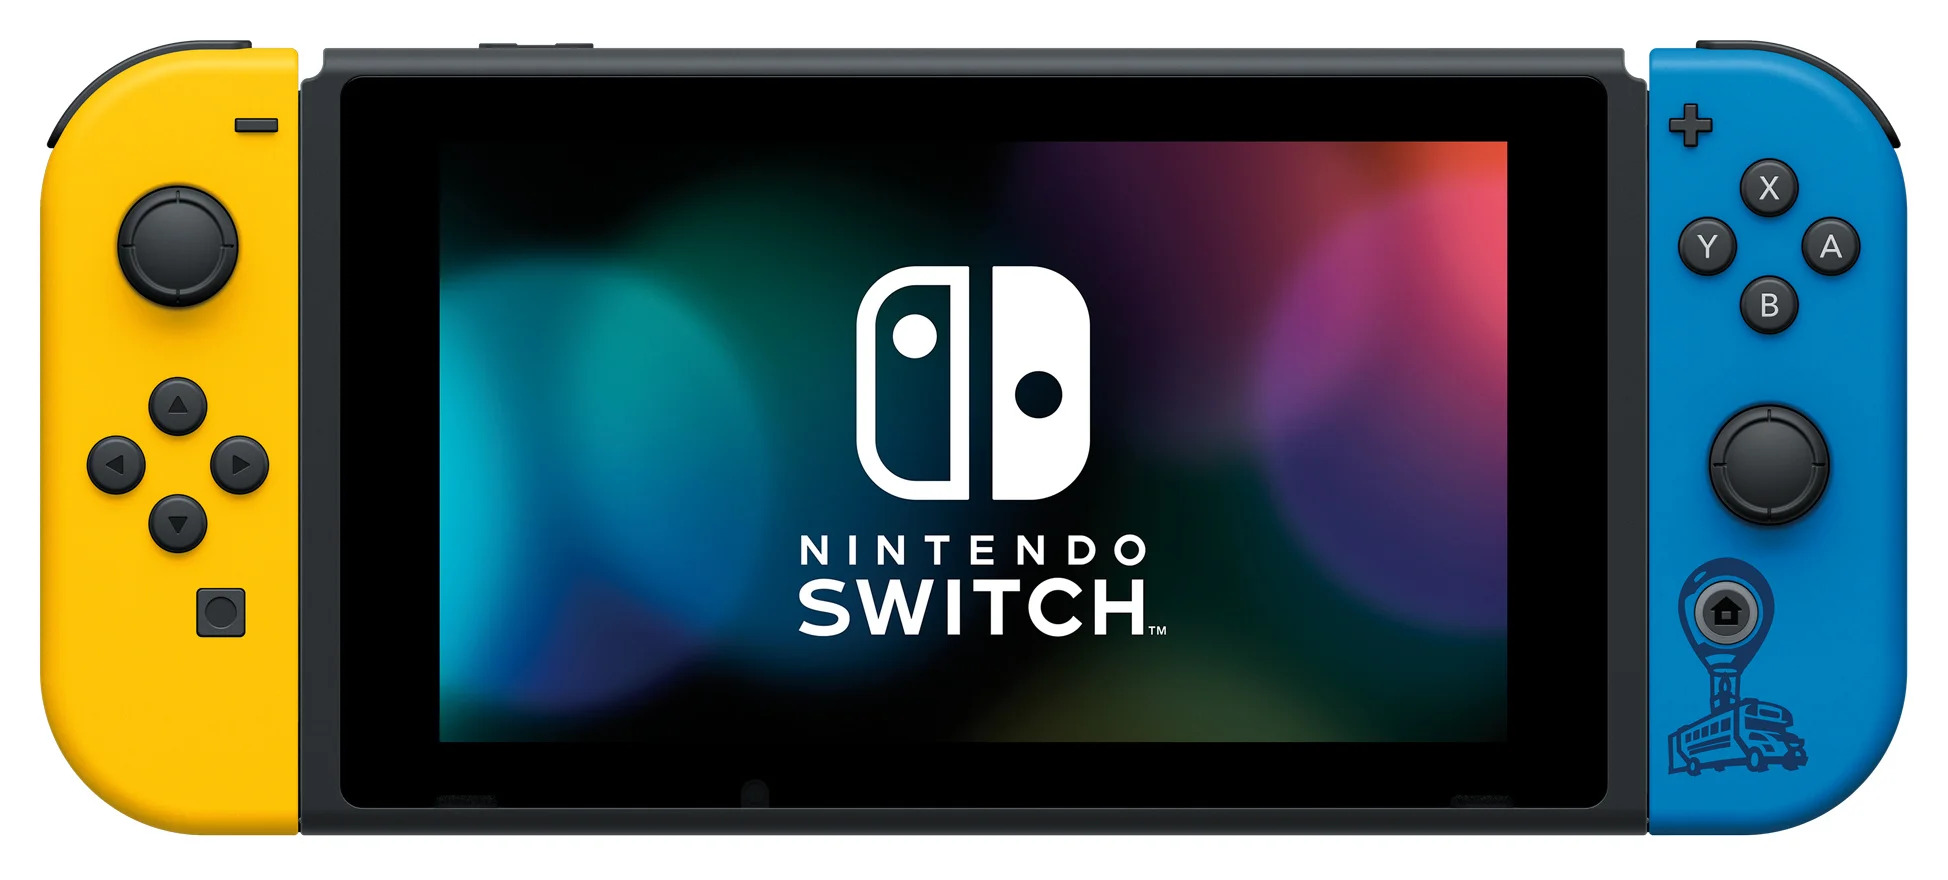 『Fortnite』がテーマのNintendo Switch本体セットがヨーロッパ向けとして発売決定！ | Nintendo Switch 情報ブログ